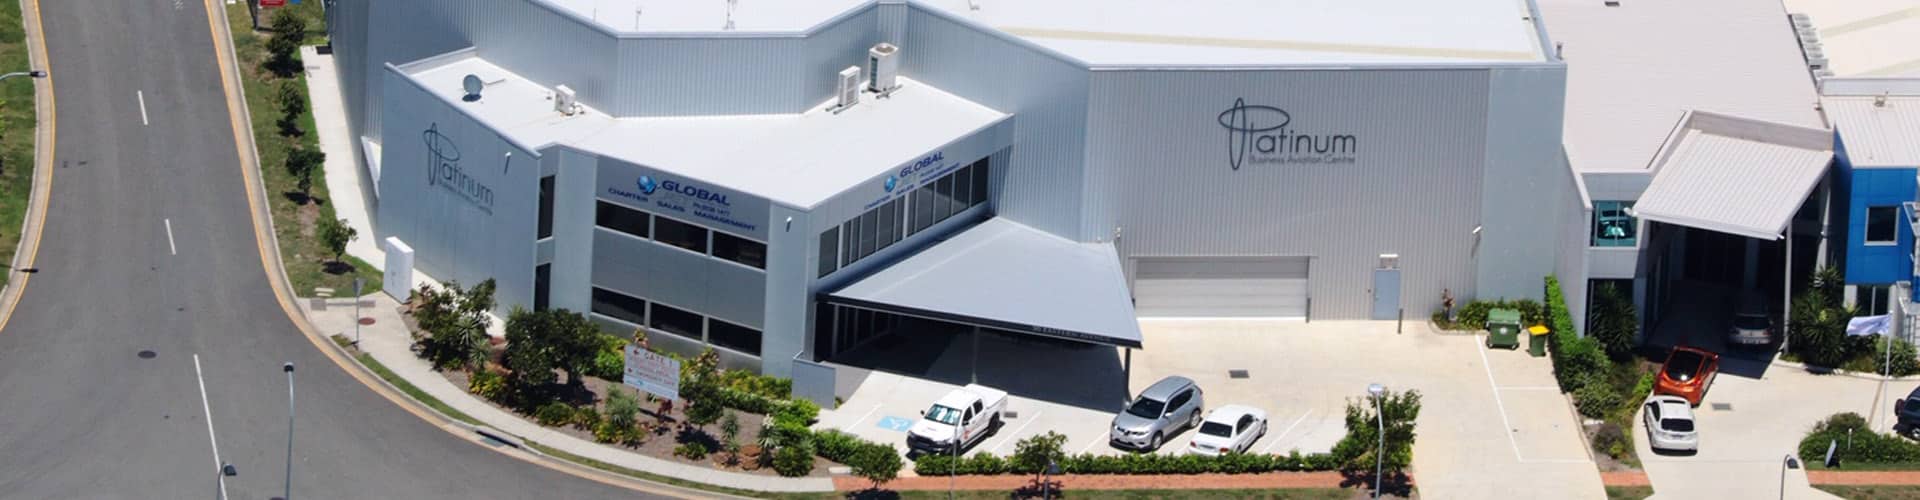 Platinum Business Aviation Centre - Gold Coast building